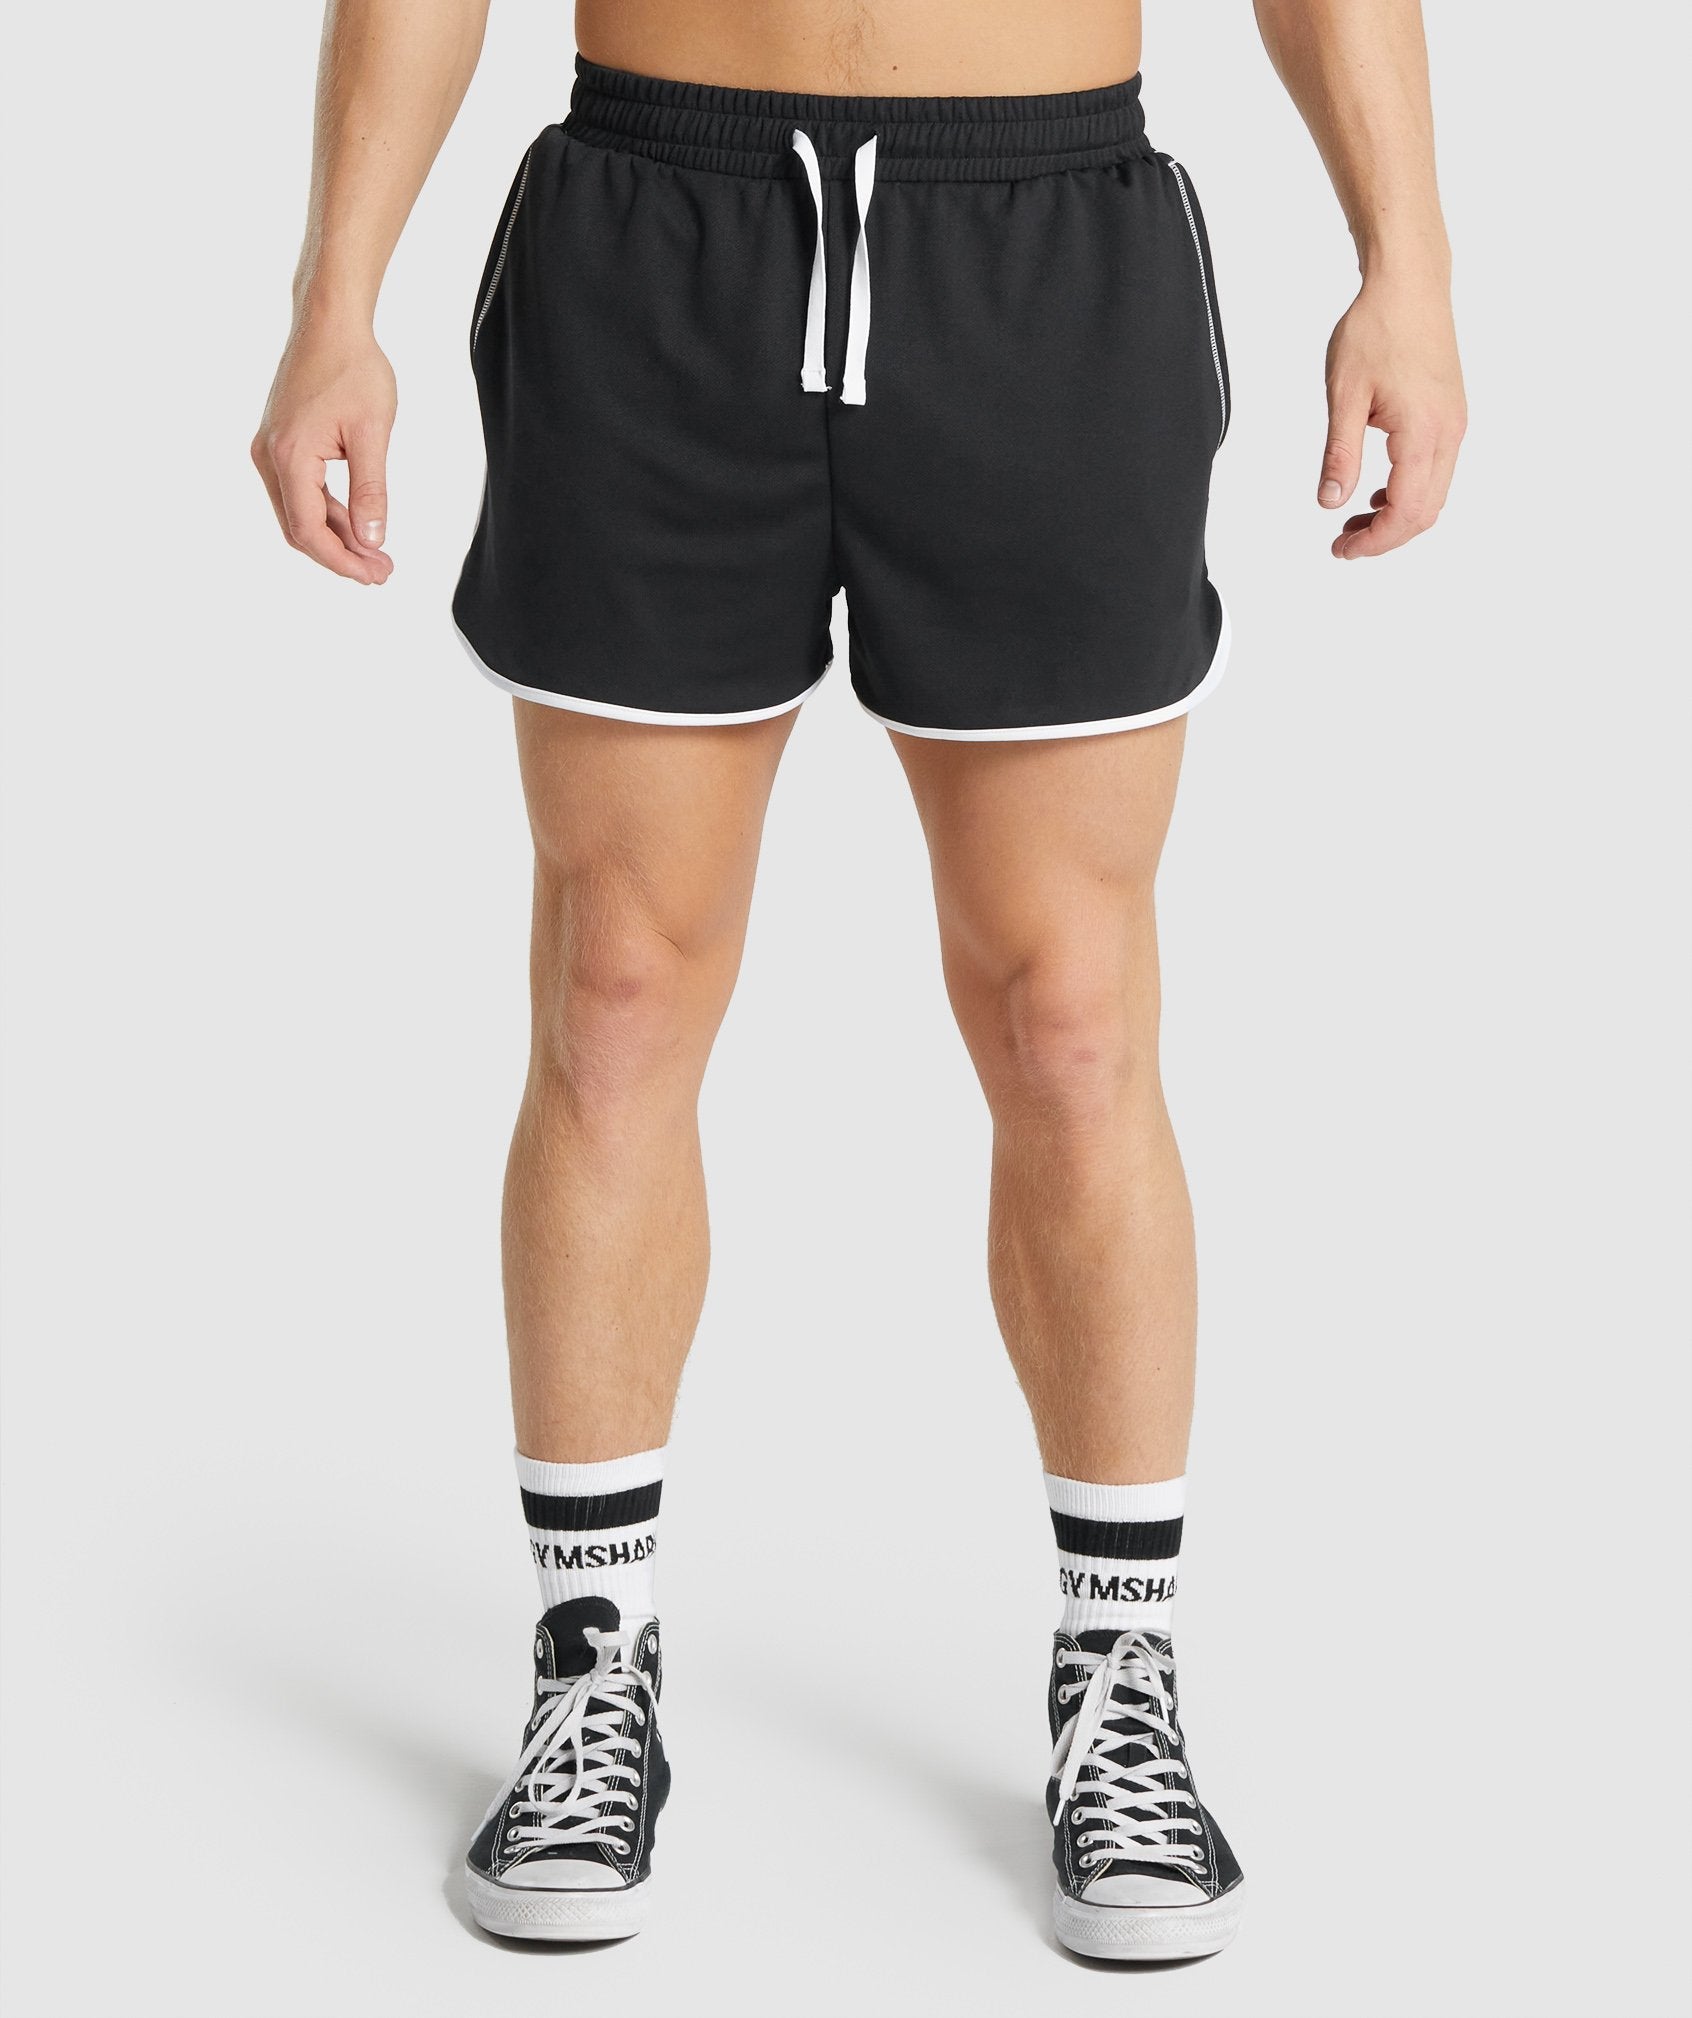 Recess 3" Quad Shorts in Black - view 1